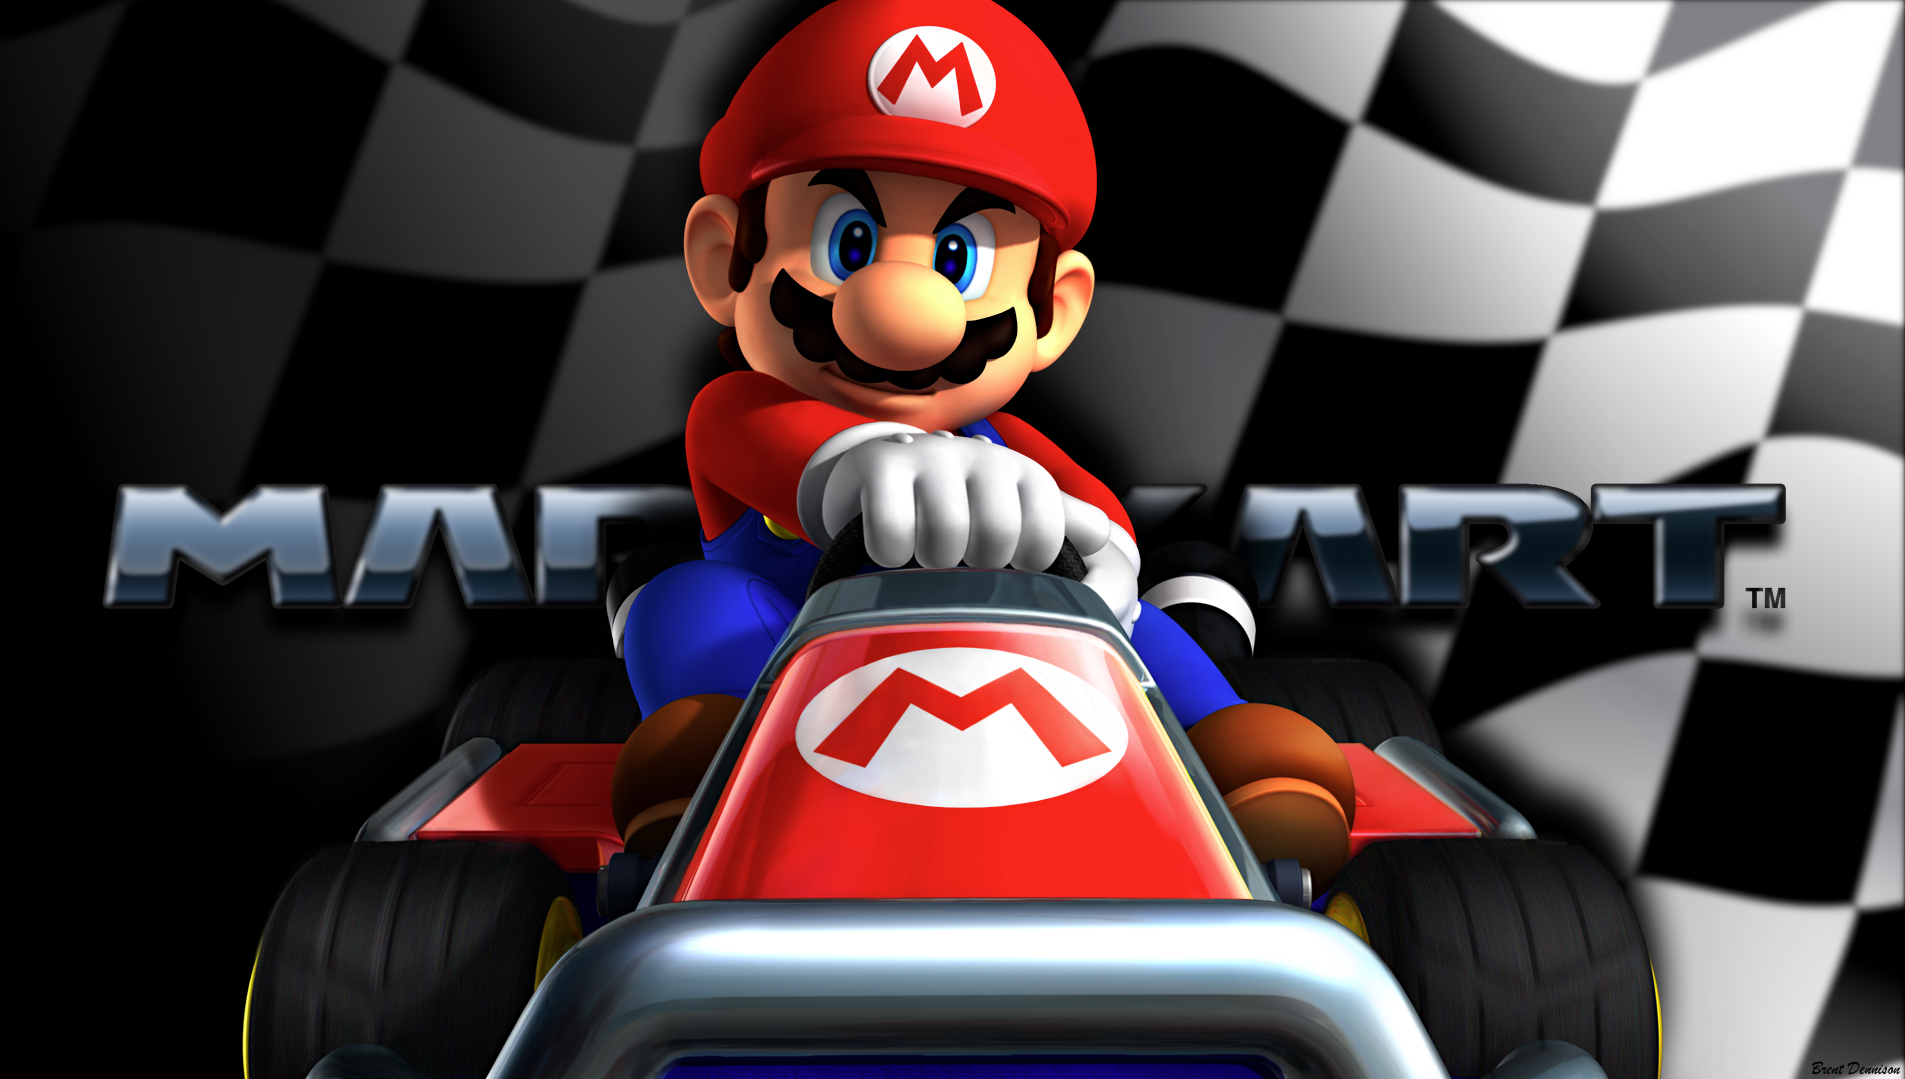 Mario Kart for 3DS Wallpaper 2 by BrentDennison